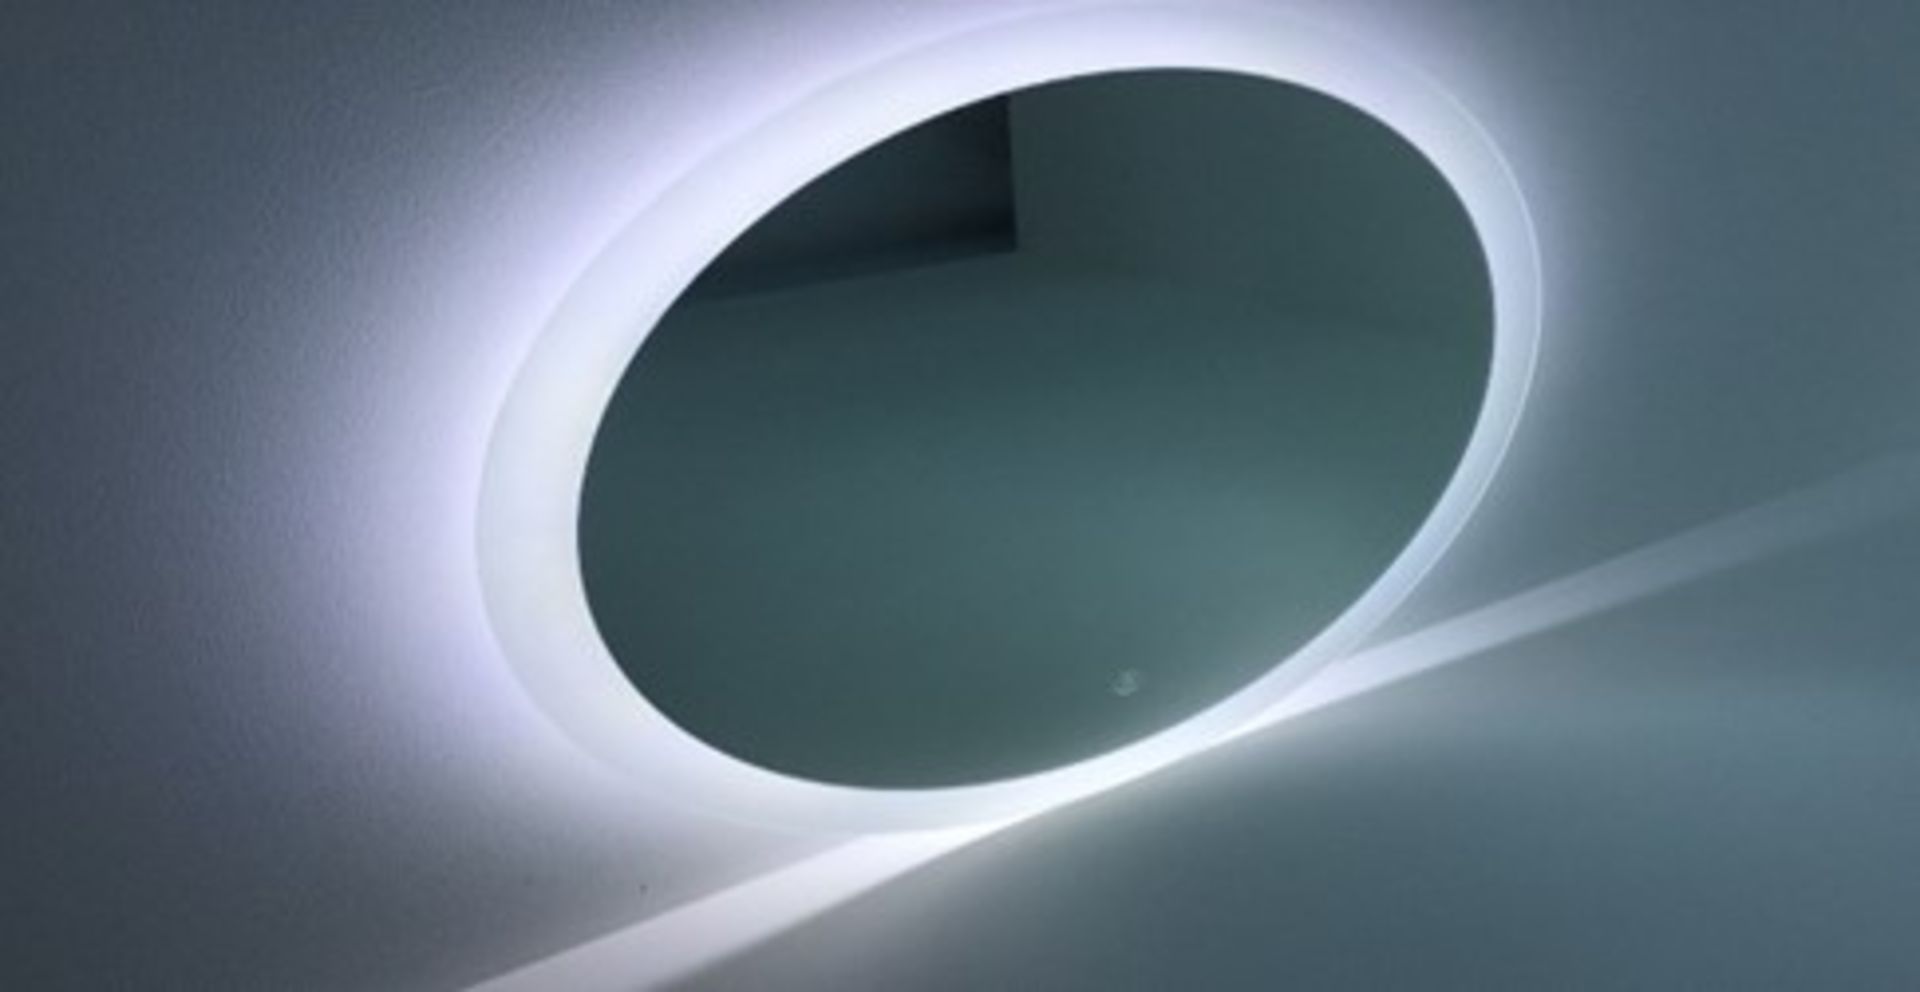 Touch Bathroom Illuminated LED Mirror - Image 2 of 2